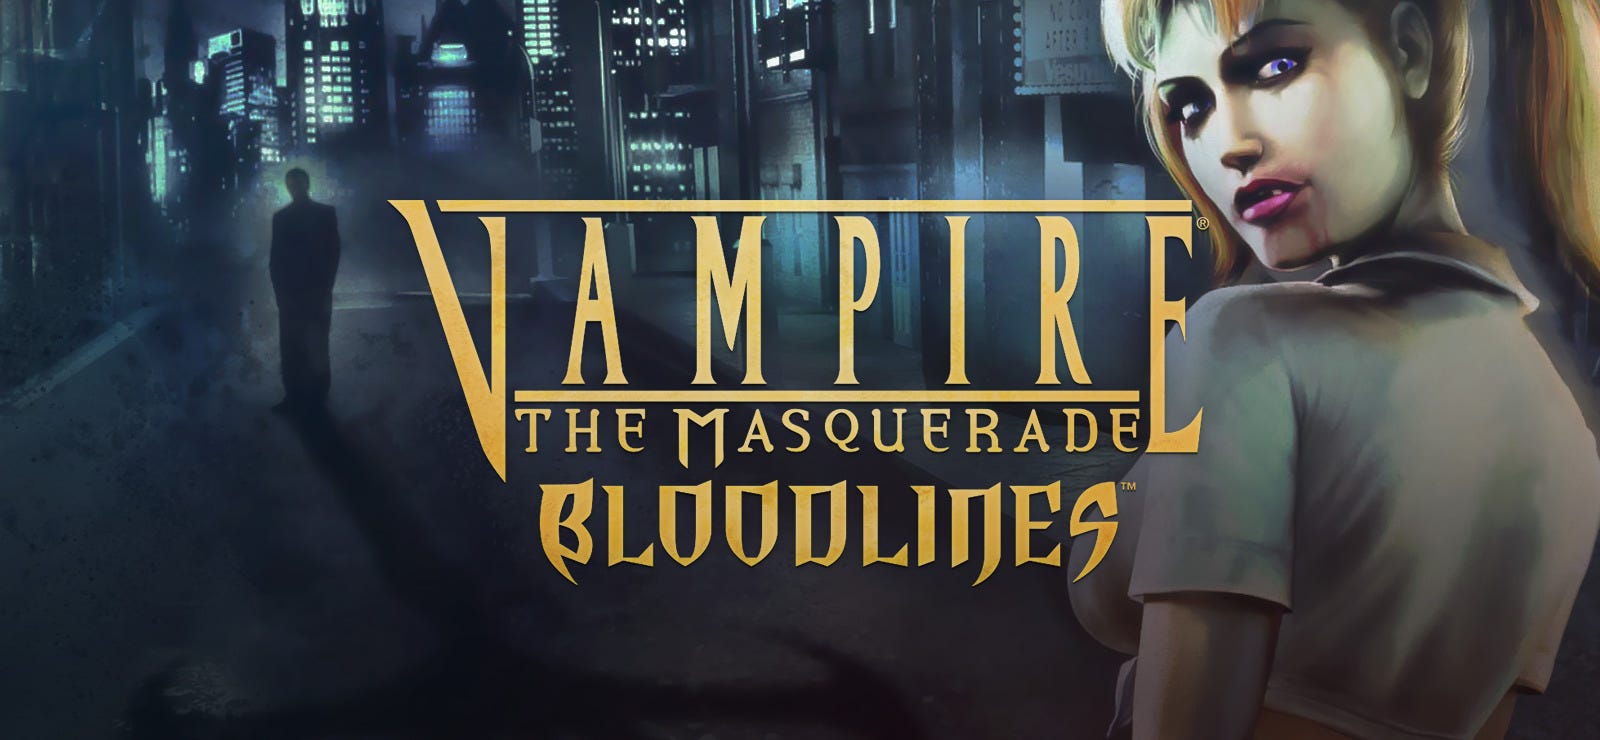 Vampire: The Masquerade - Bloodlines (Original Game Soundtrack) - Rik